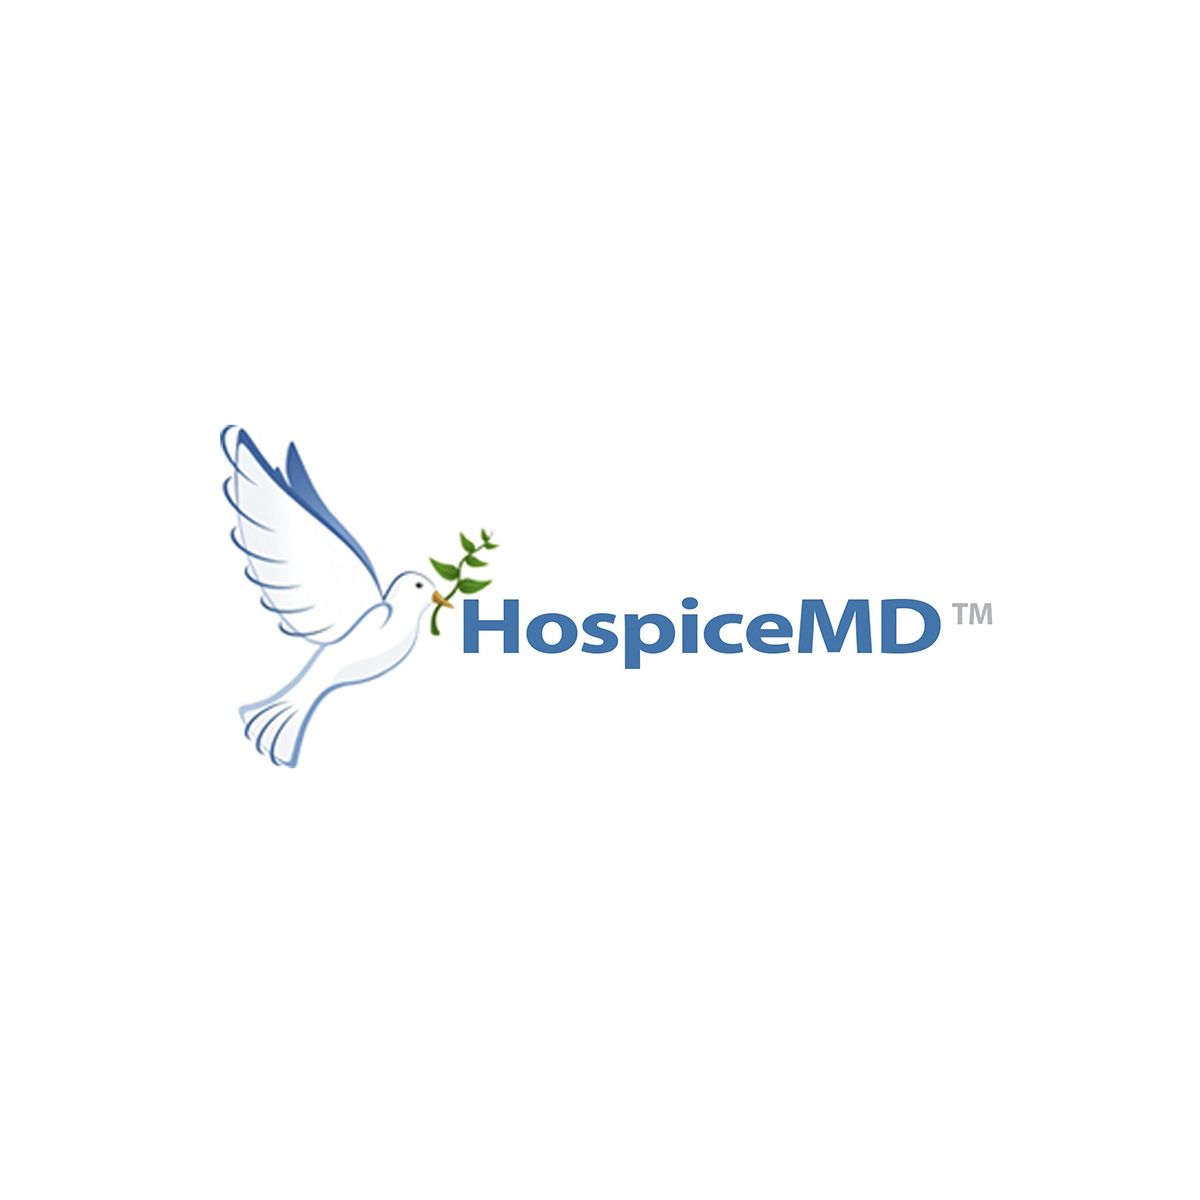 HospiceMD logo